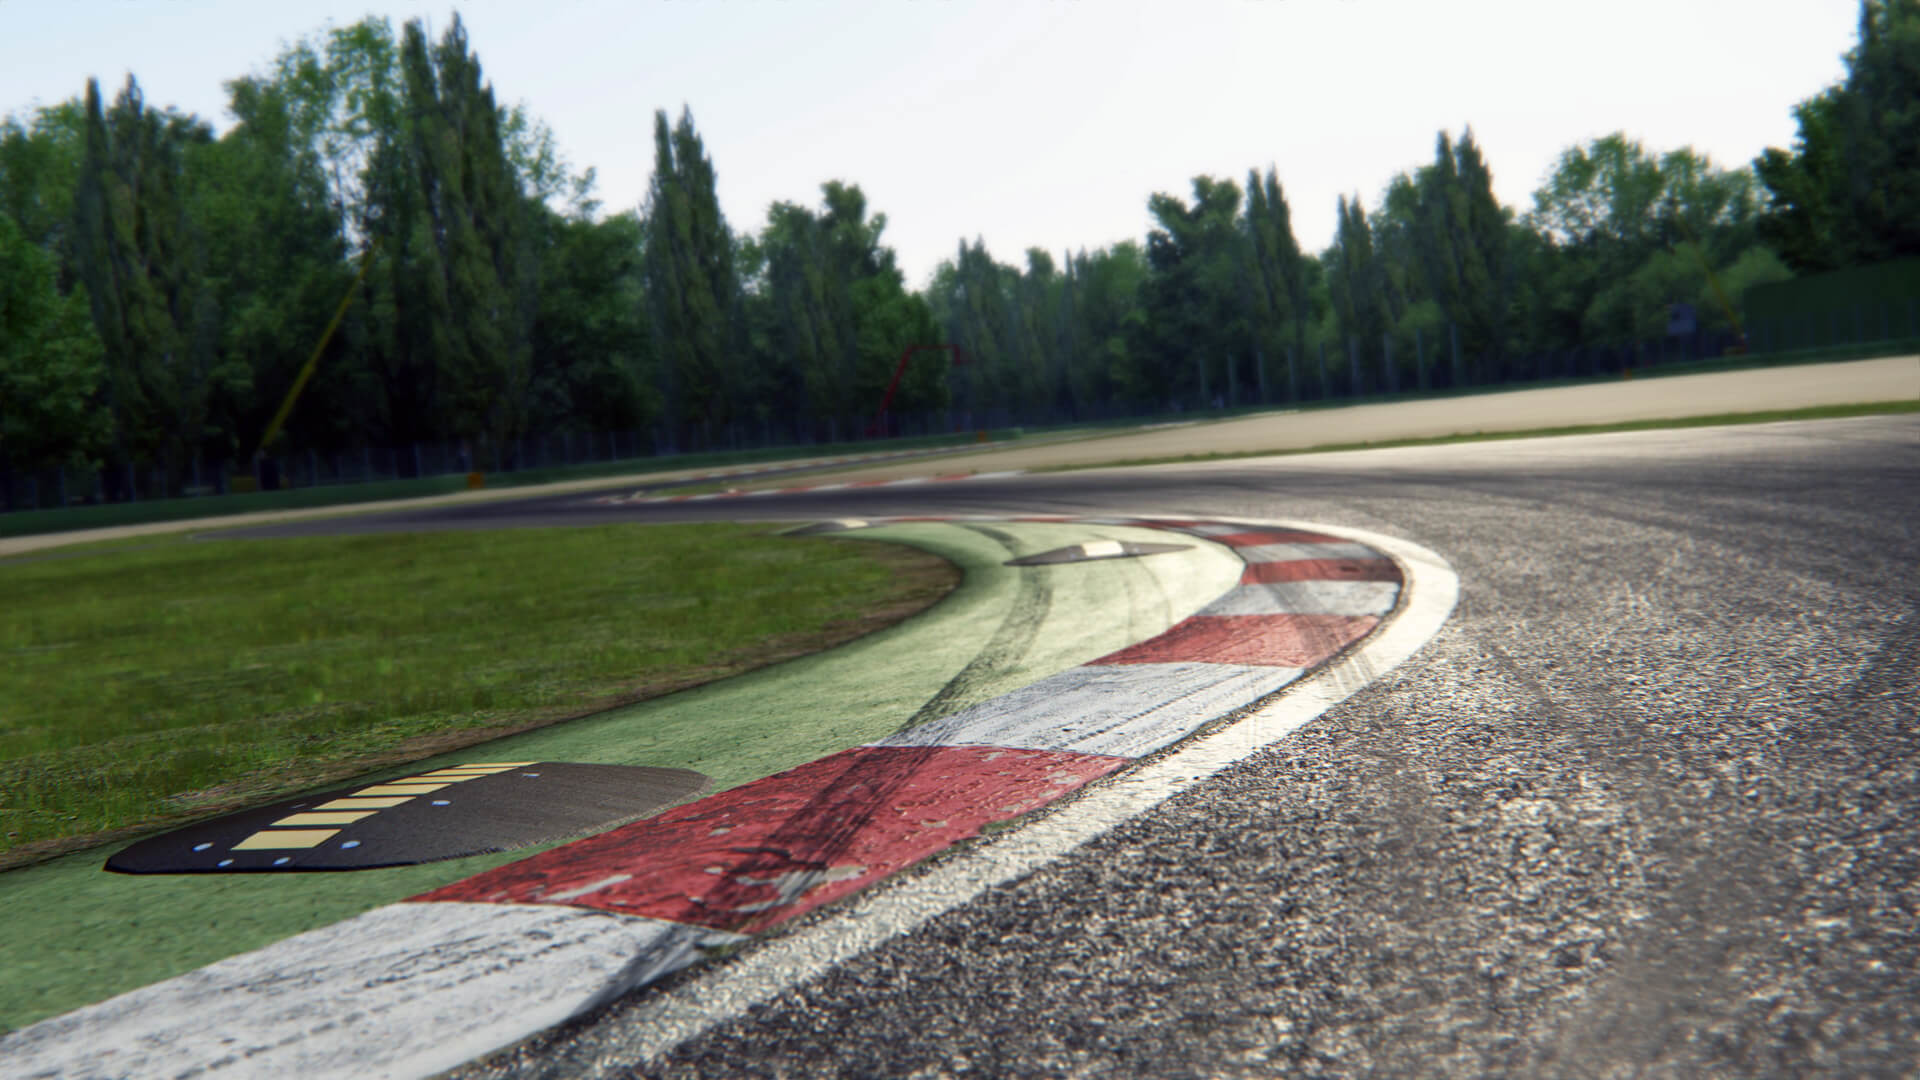 race track wallpaper,race track,asphalt,road,road surface,sport venue